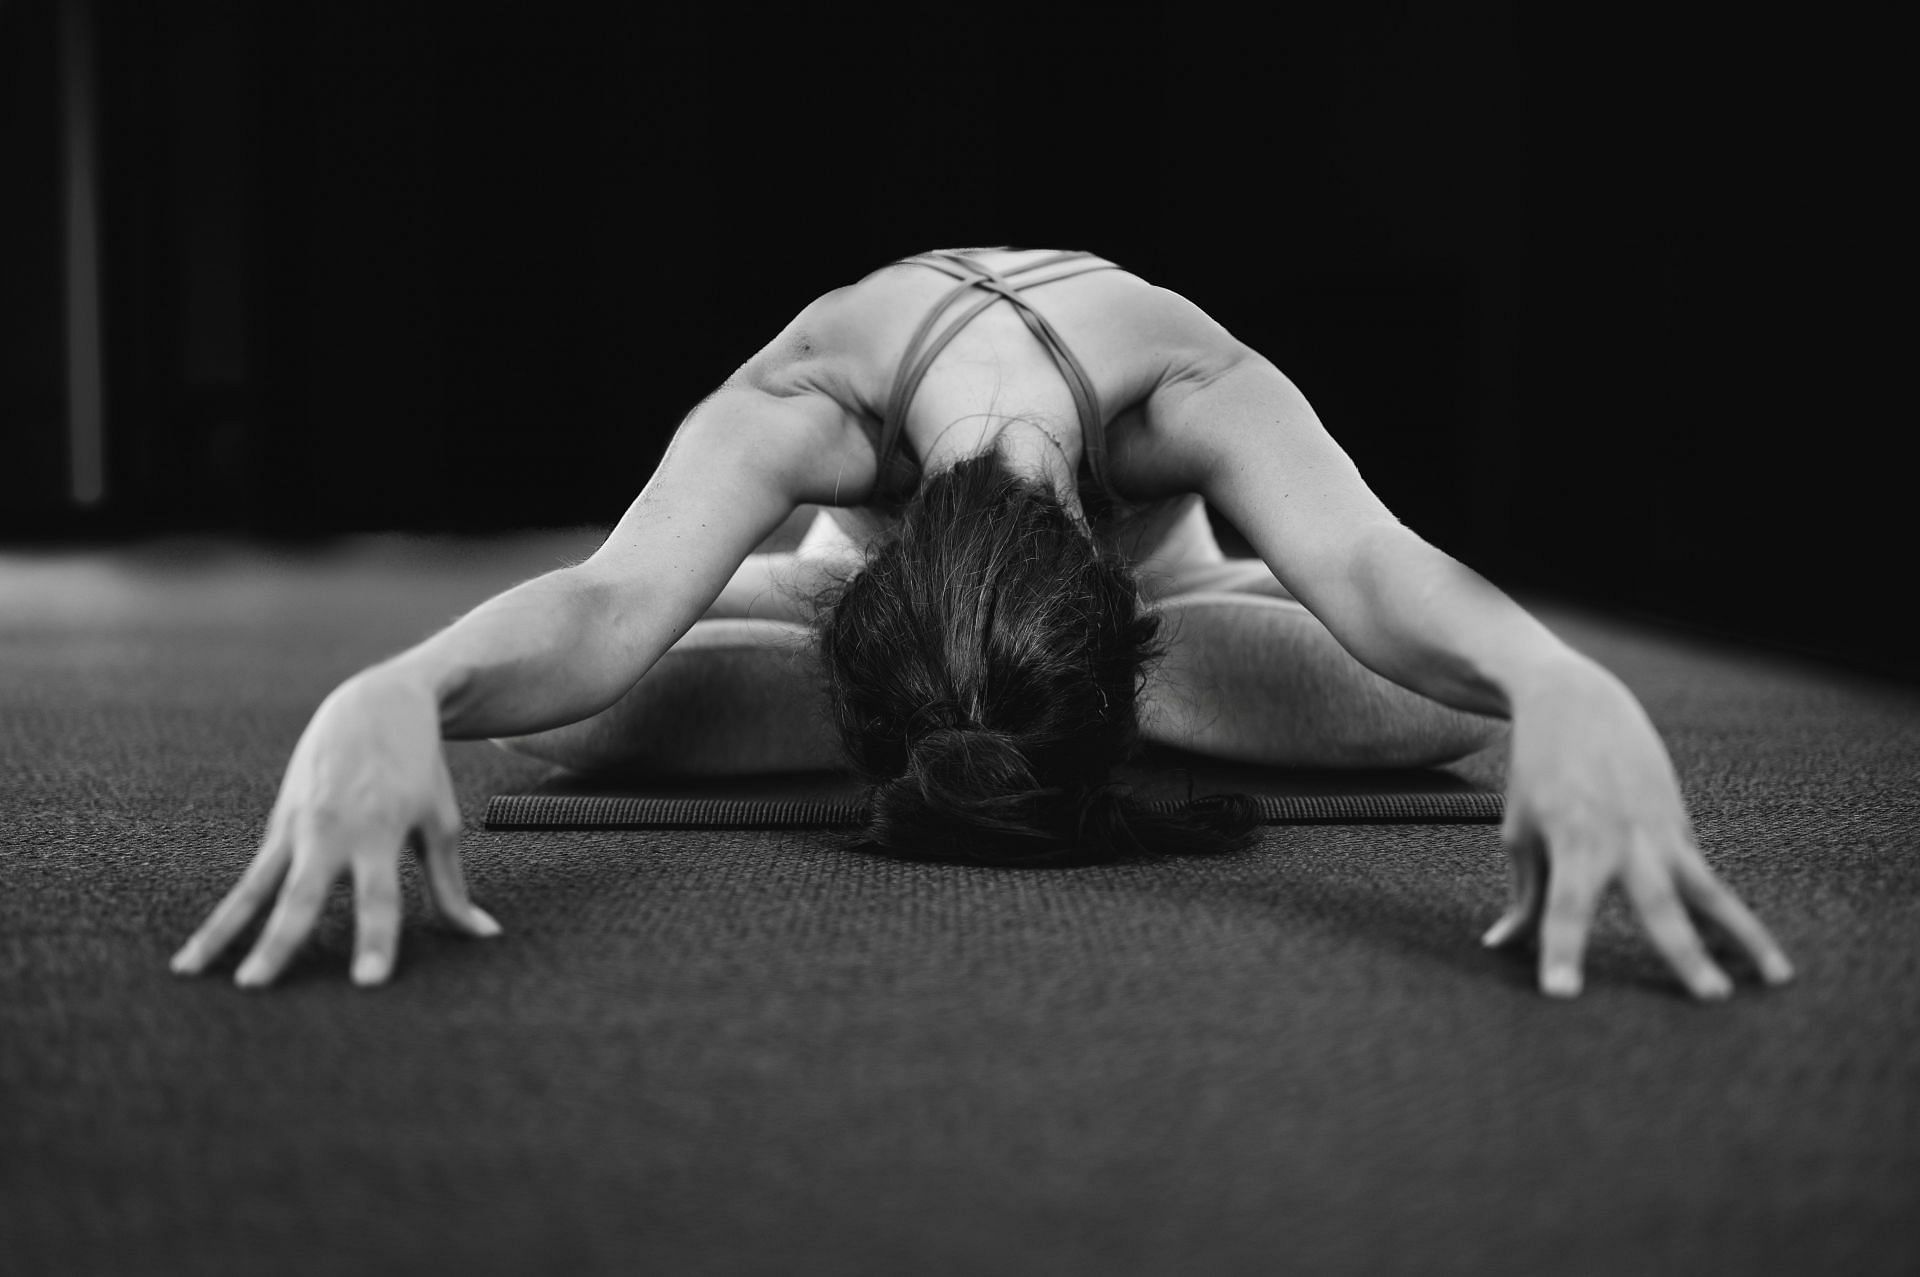 Improves your flexibility (Image by Conscious Design/Unsplash)